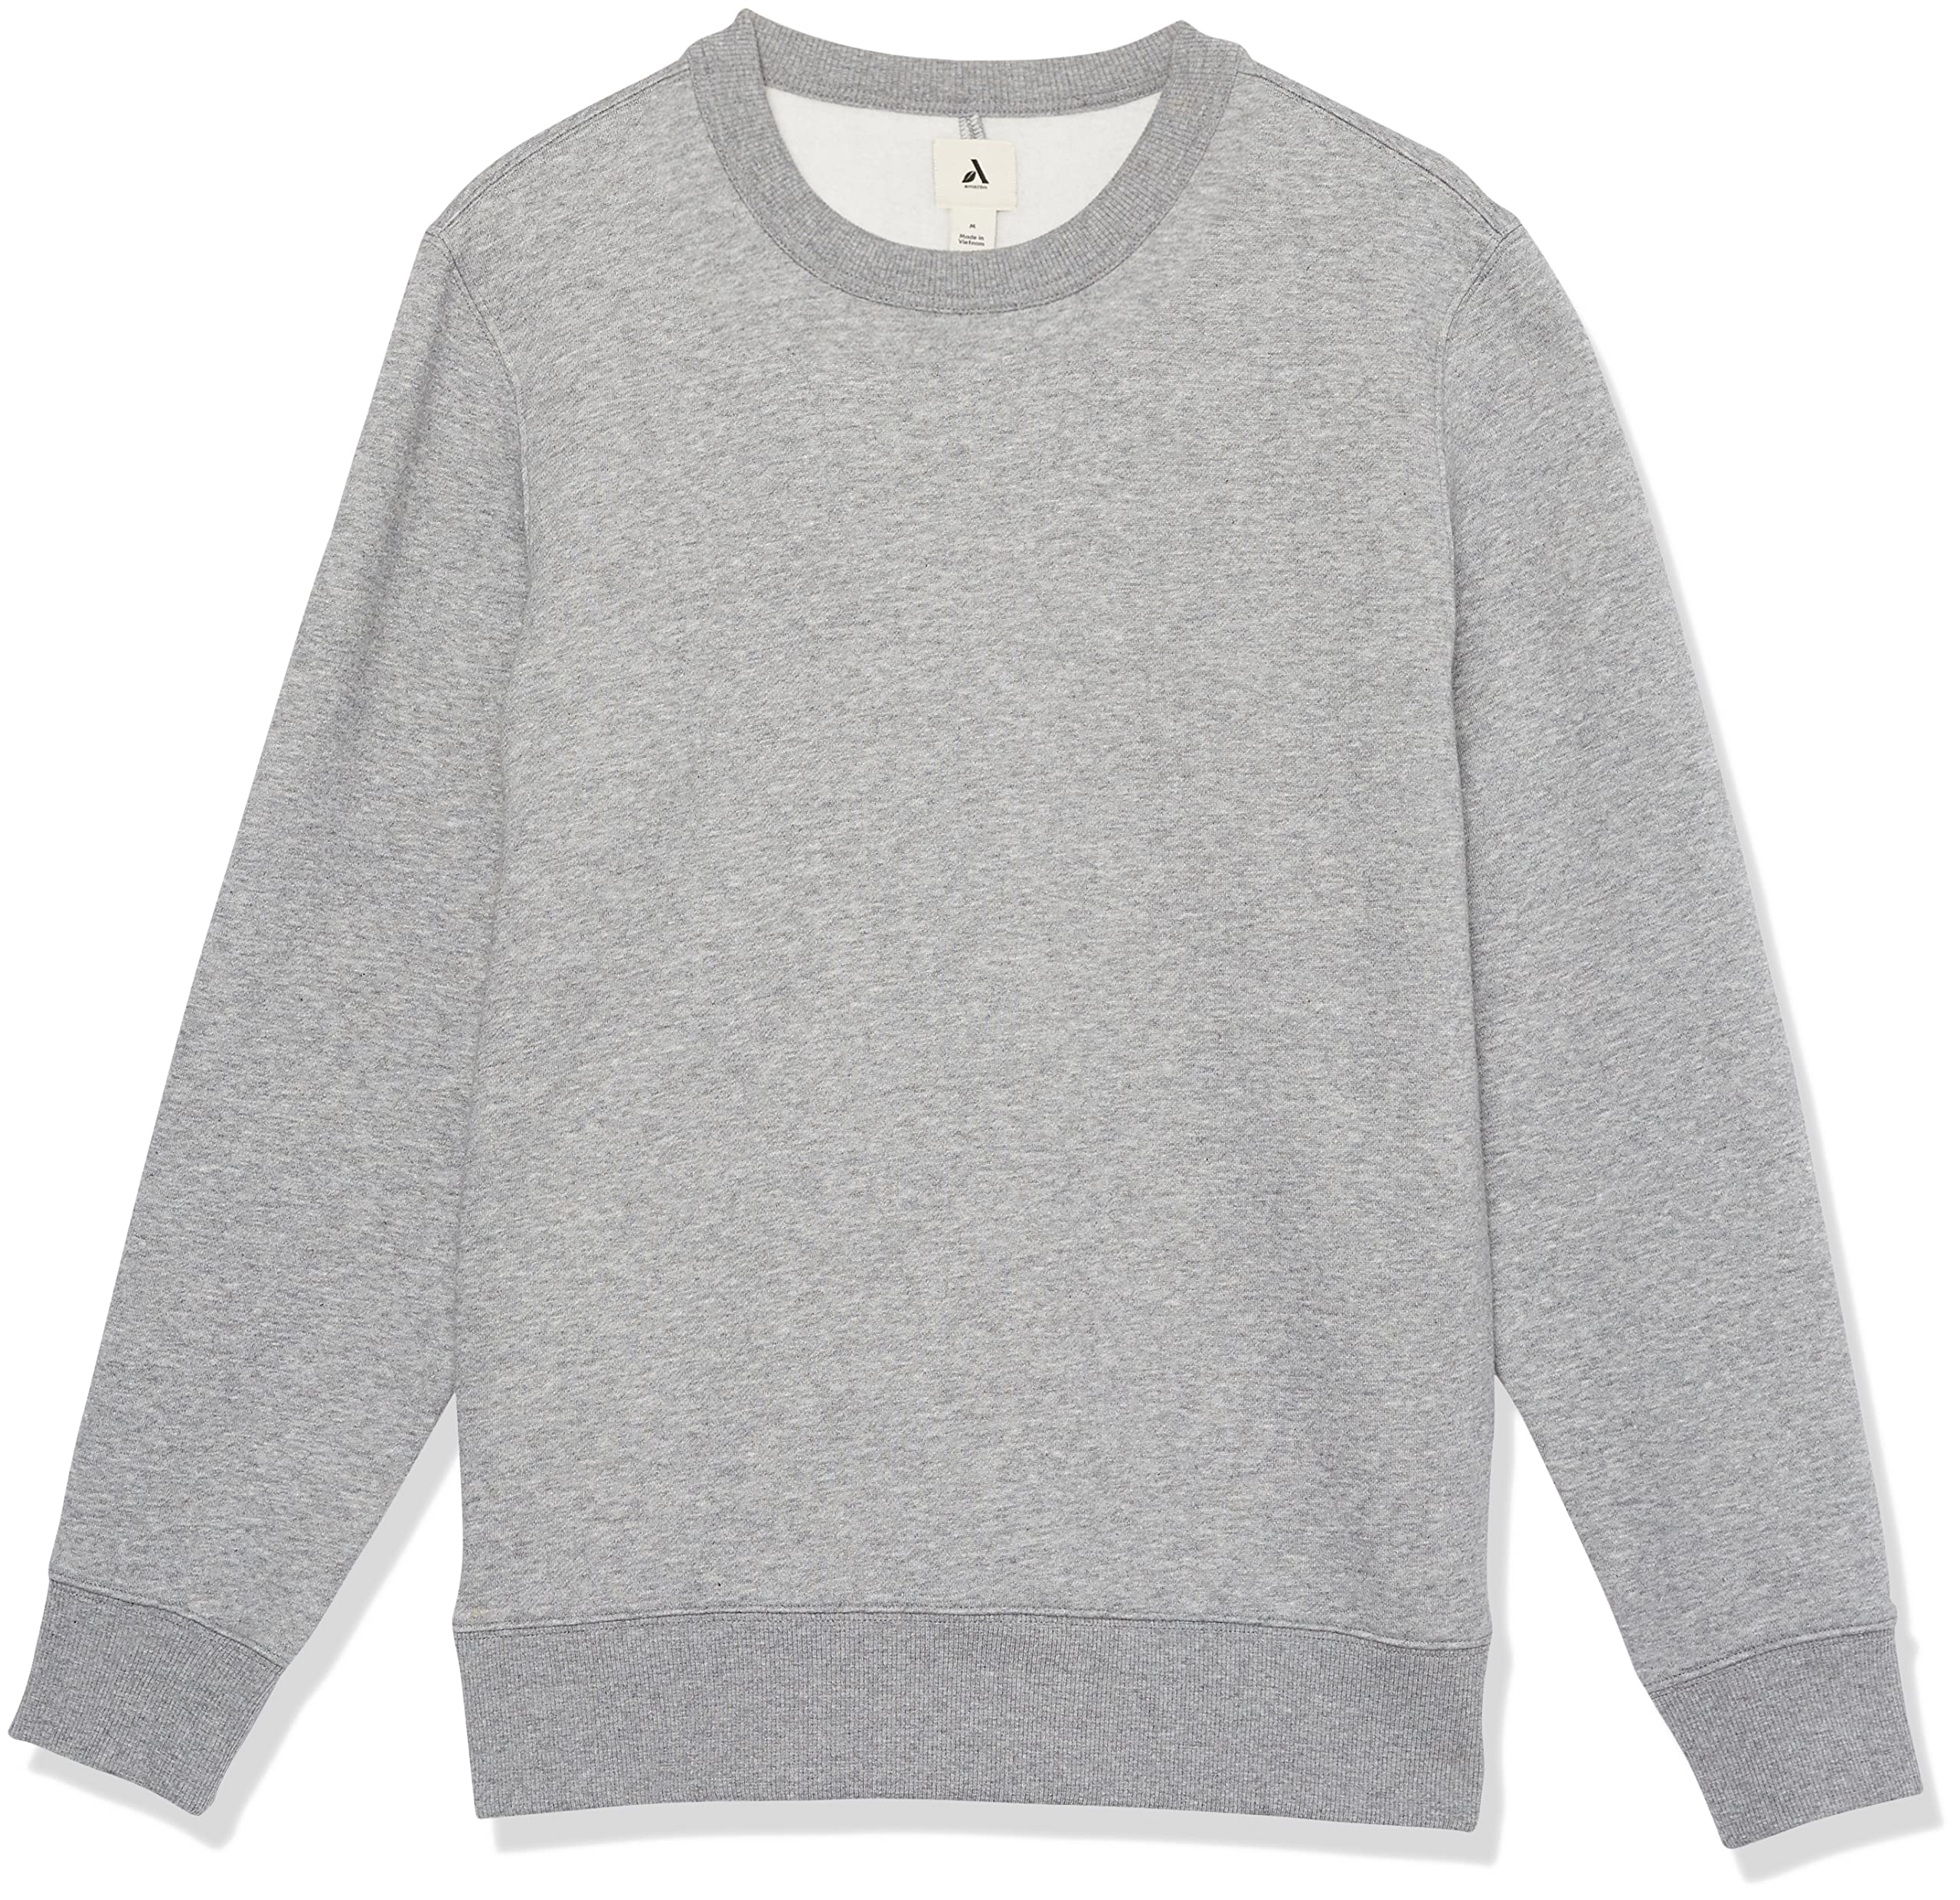 Amazon Aware Men's Crewneck Fleece Sweatshirt, Grey Heather $8.6